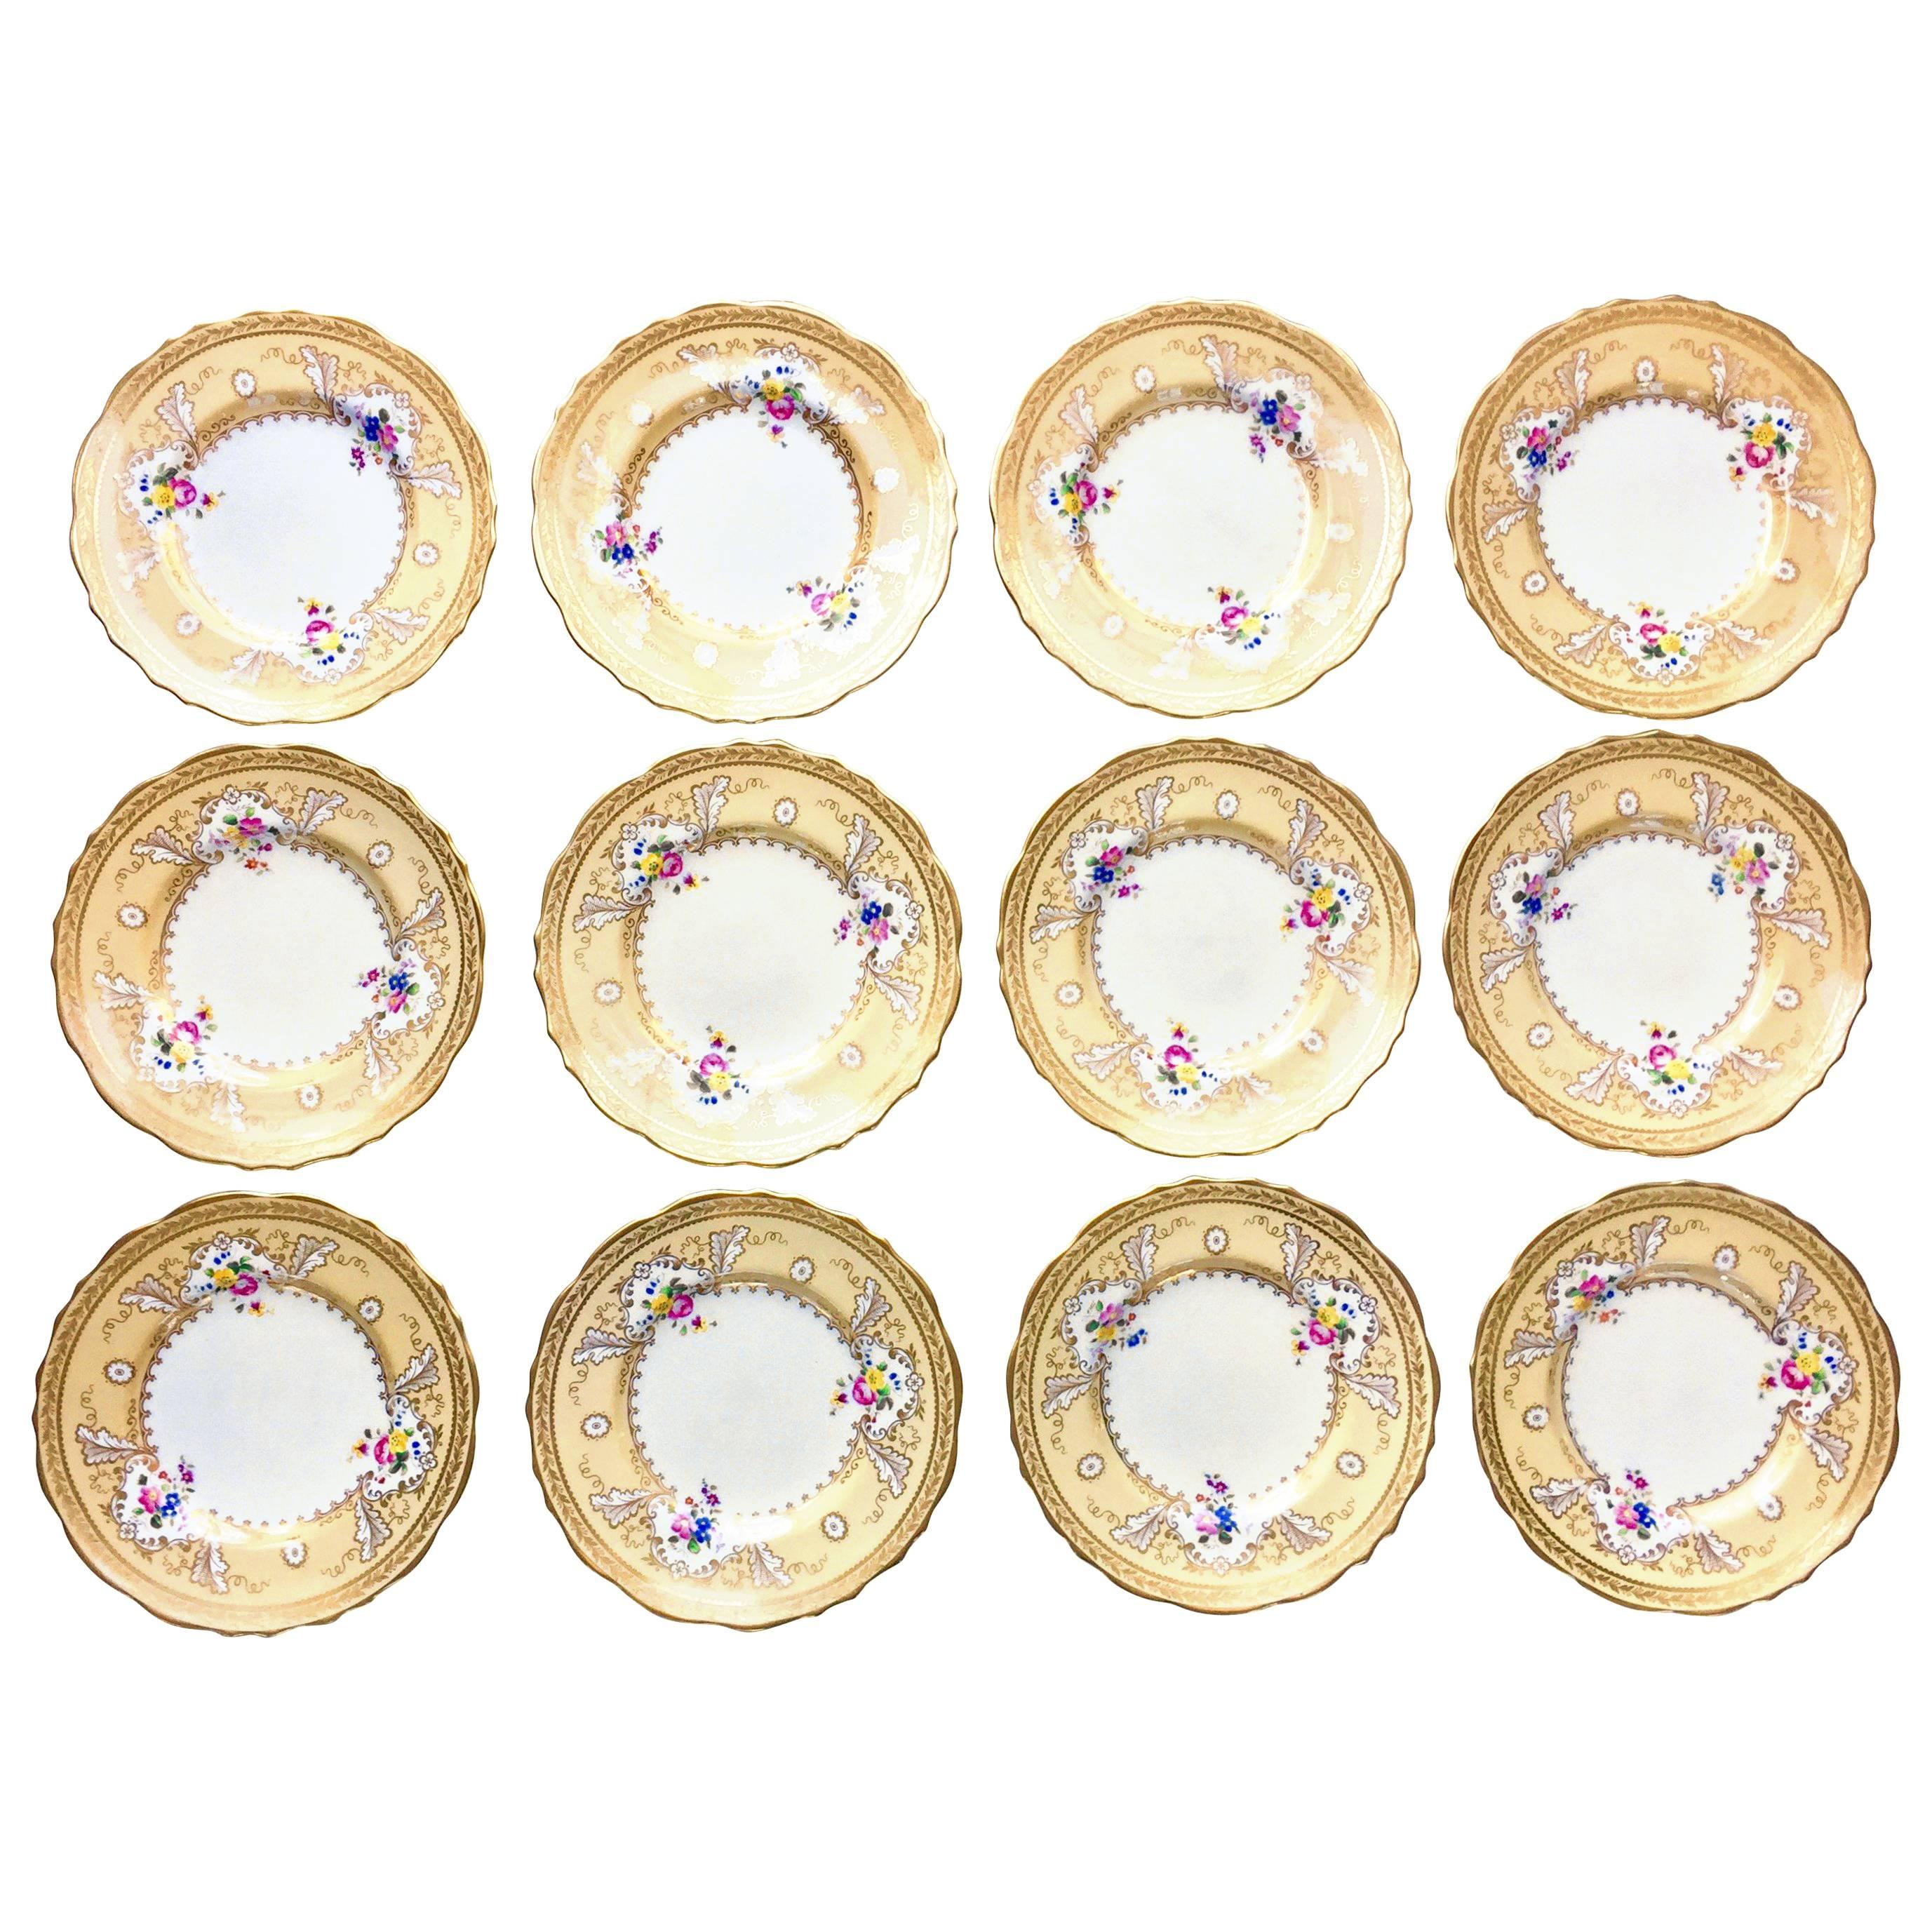 12 Tiffany Desert Plates